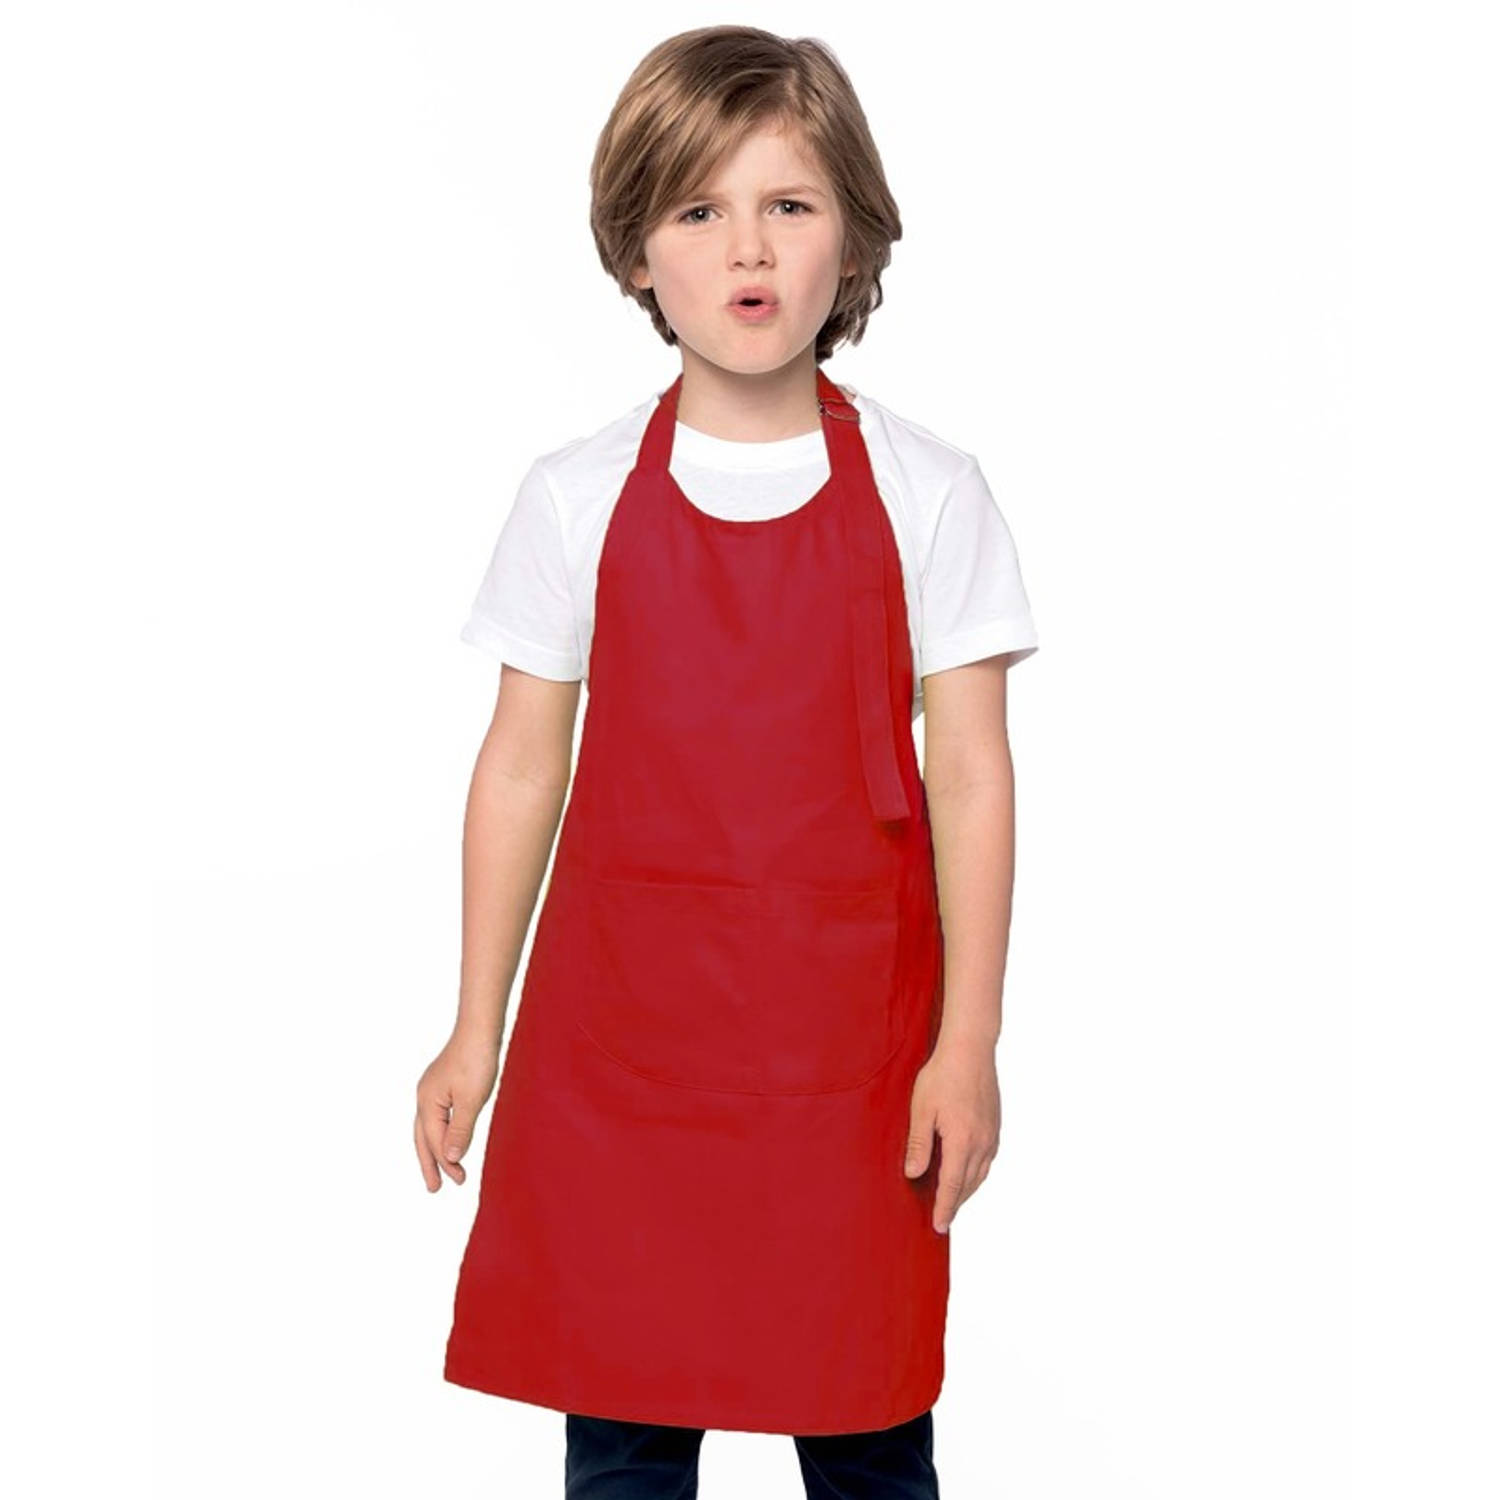 Basic schort kind rood keukenschort- kliederschort- kookschort- knutselschort- kinderschort